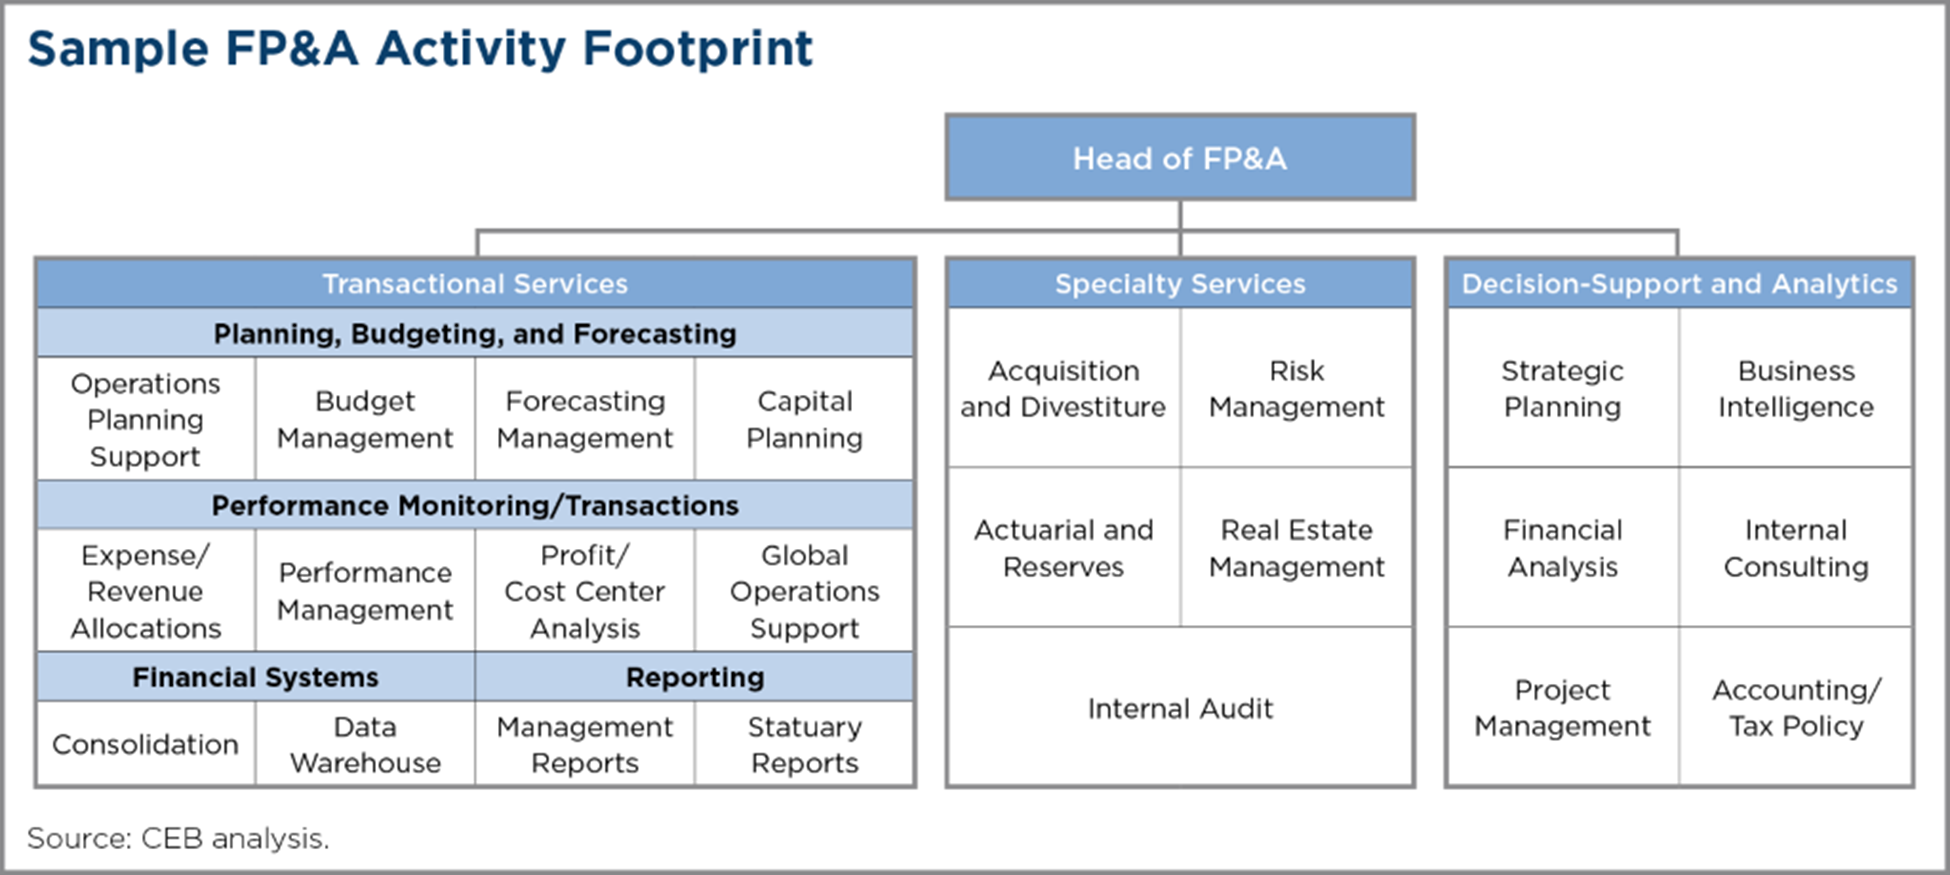 Sample FP&A Activity Footprint